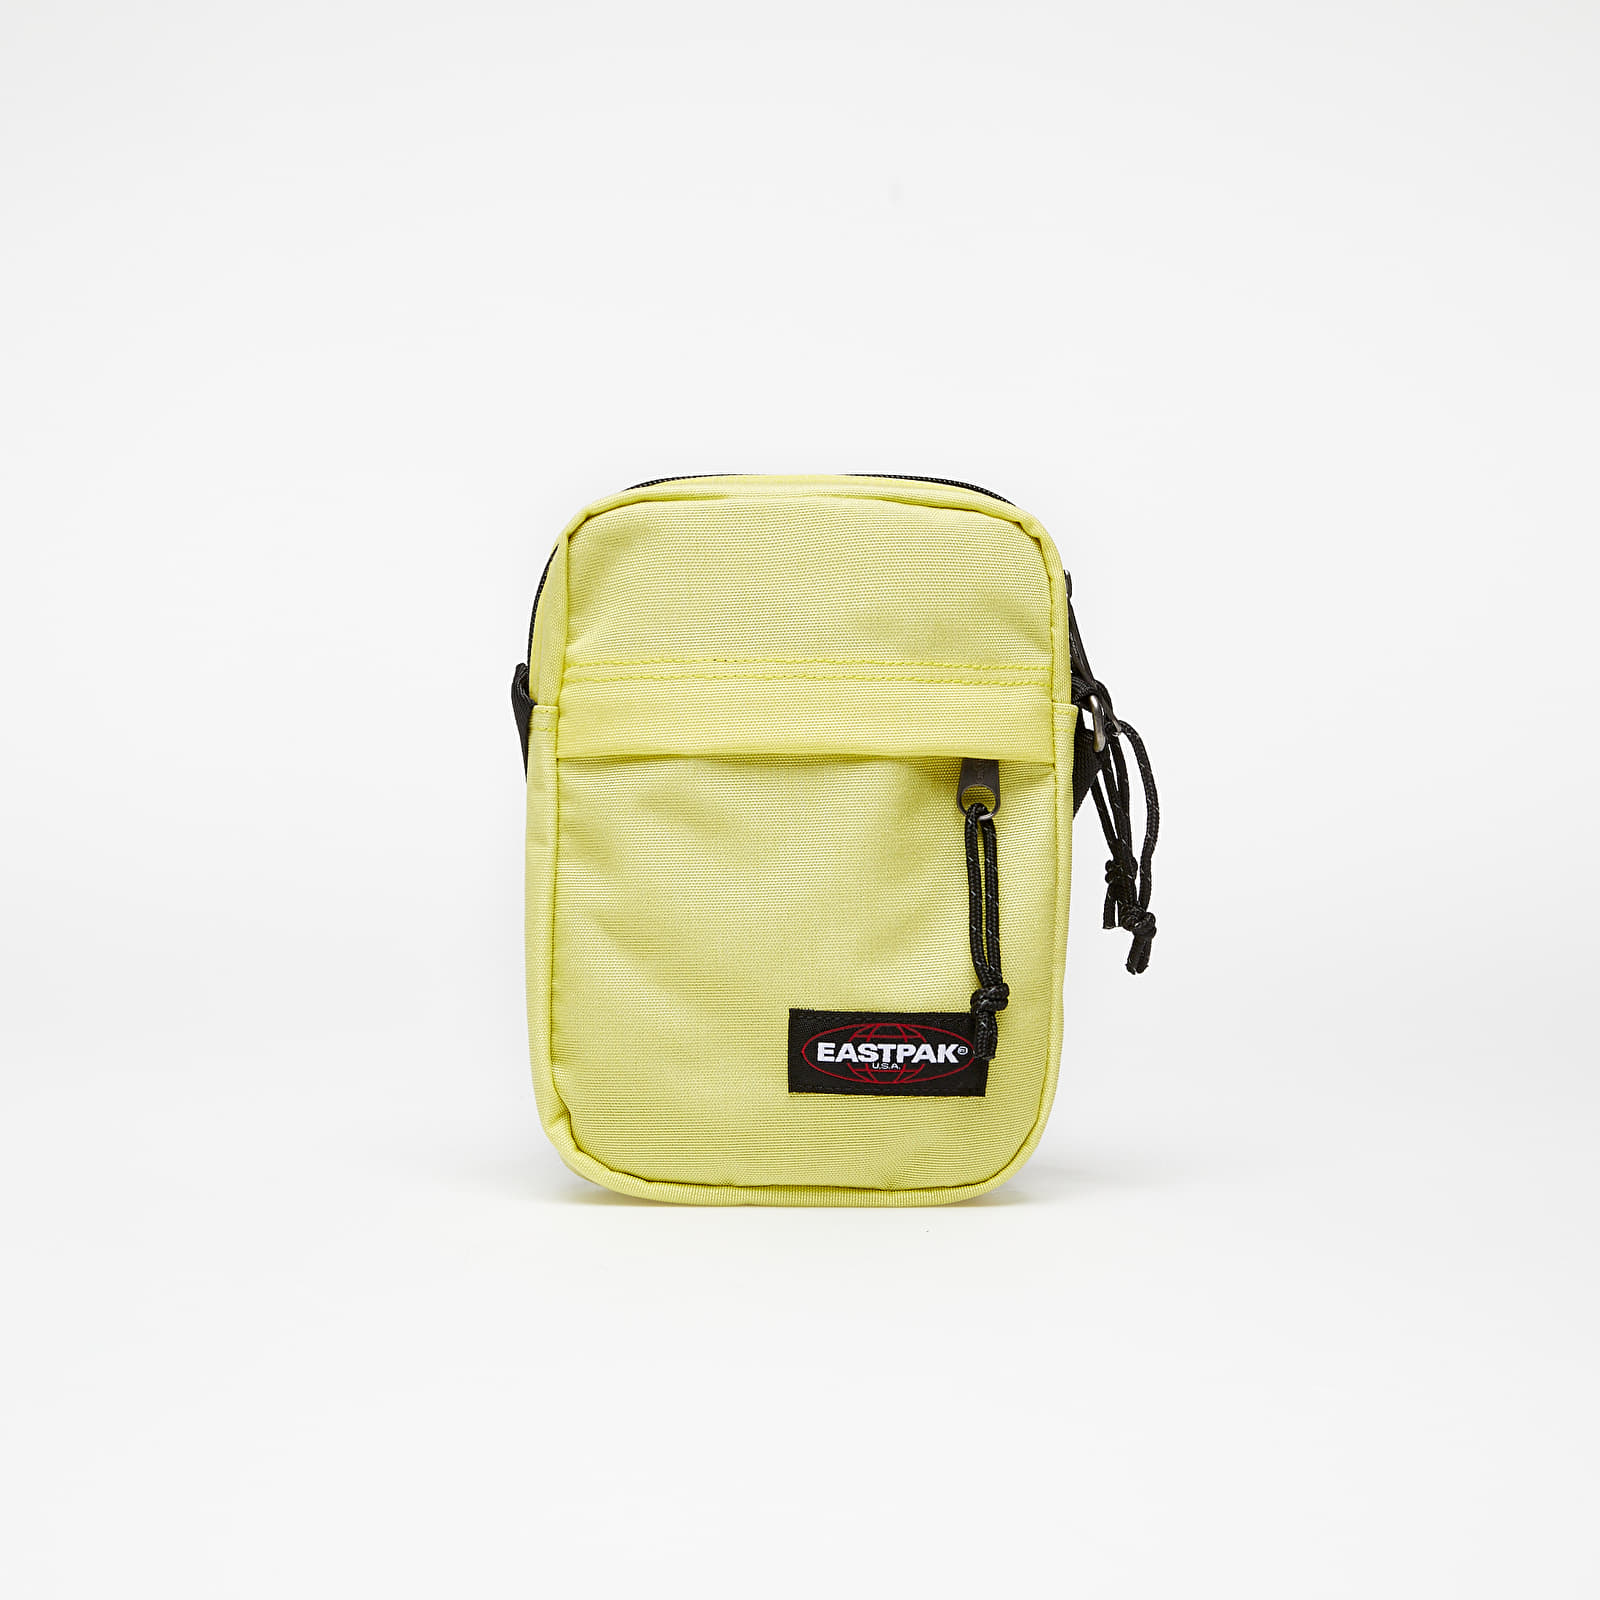 Torbe & ruksaci Eastpak The One Mini Bag Beachy Yellow